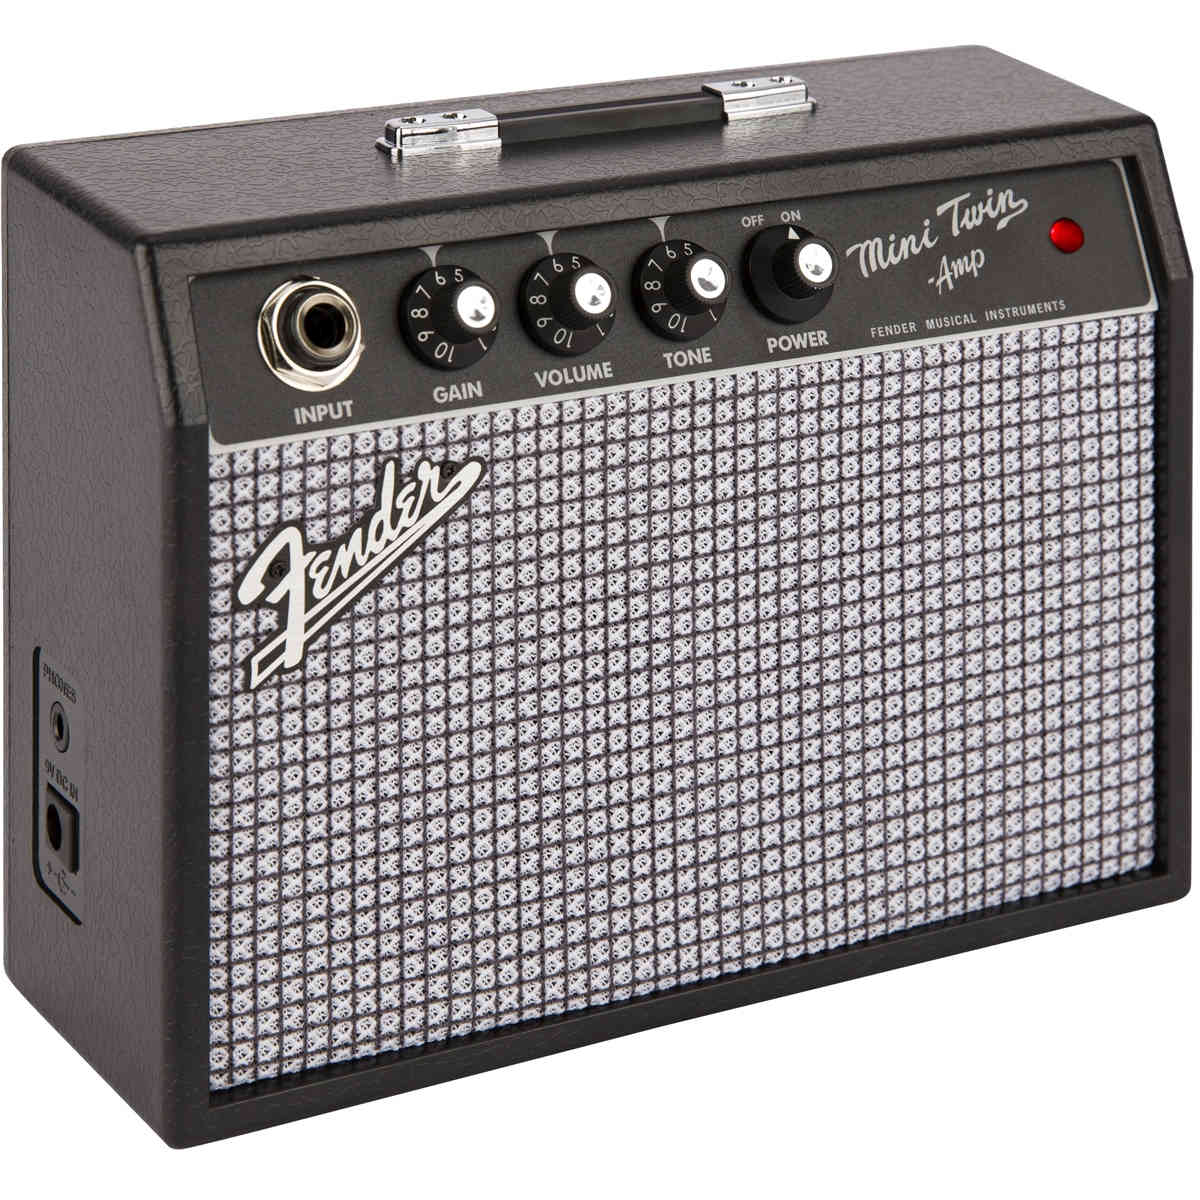 Fender Mini \'65 Twin-Amp™